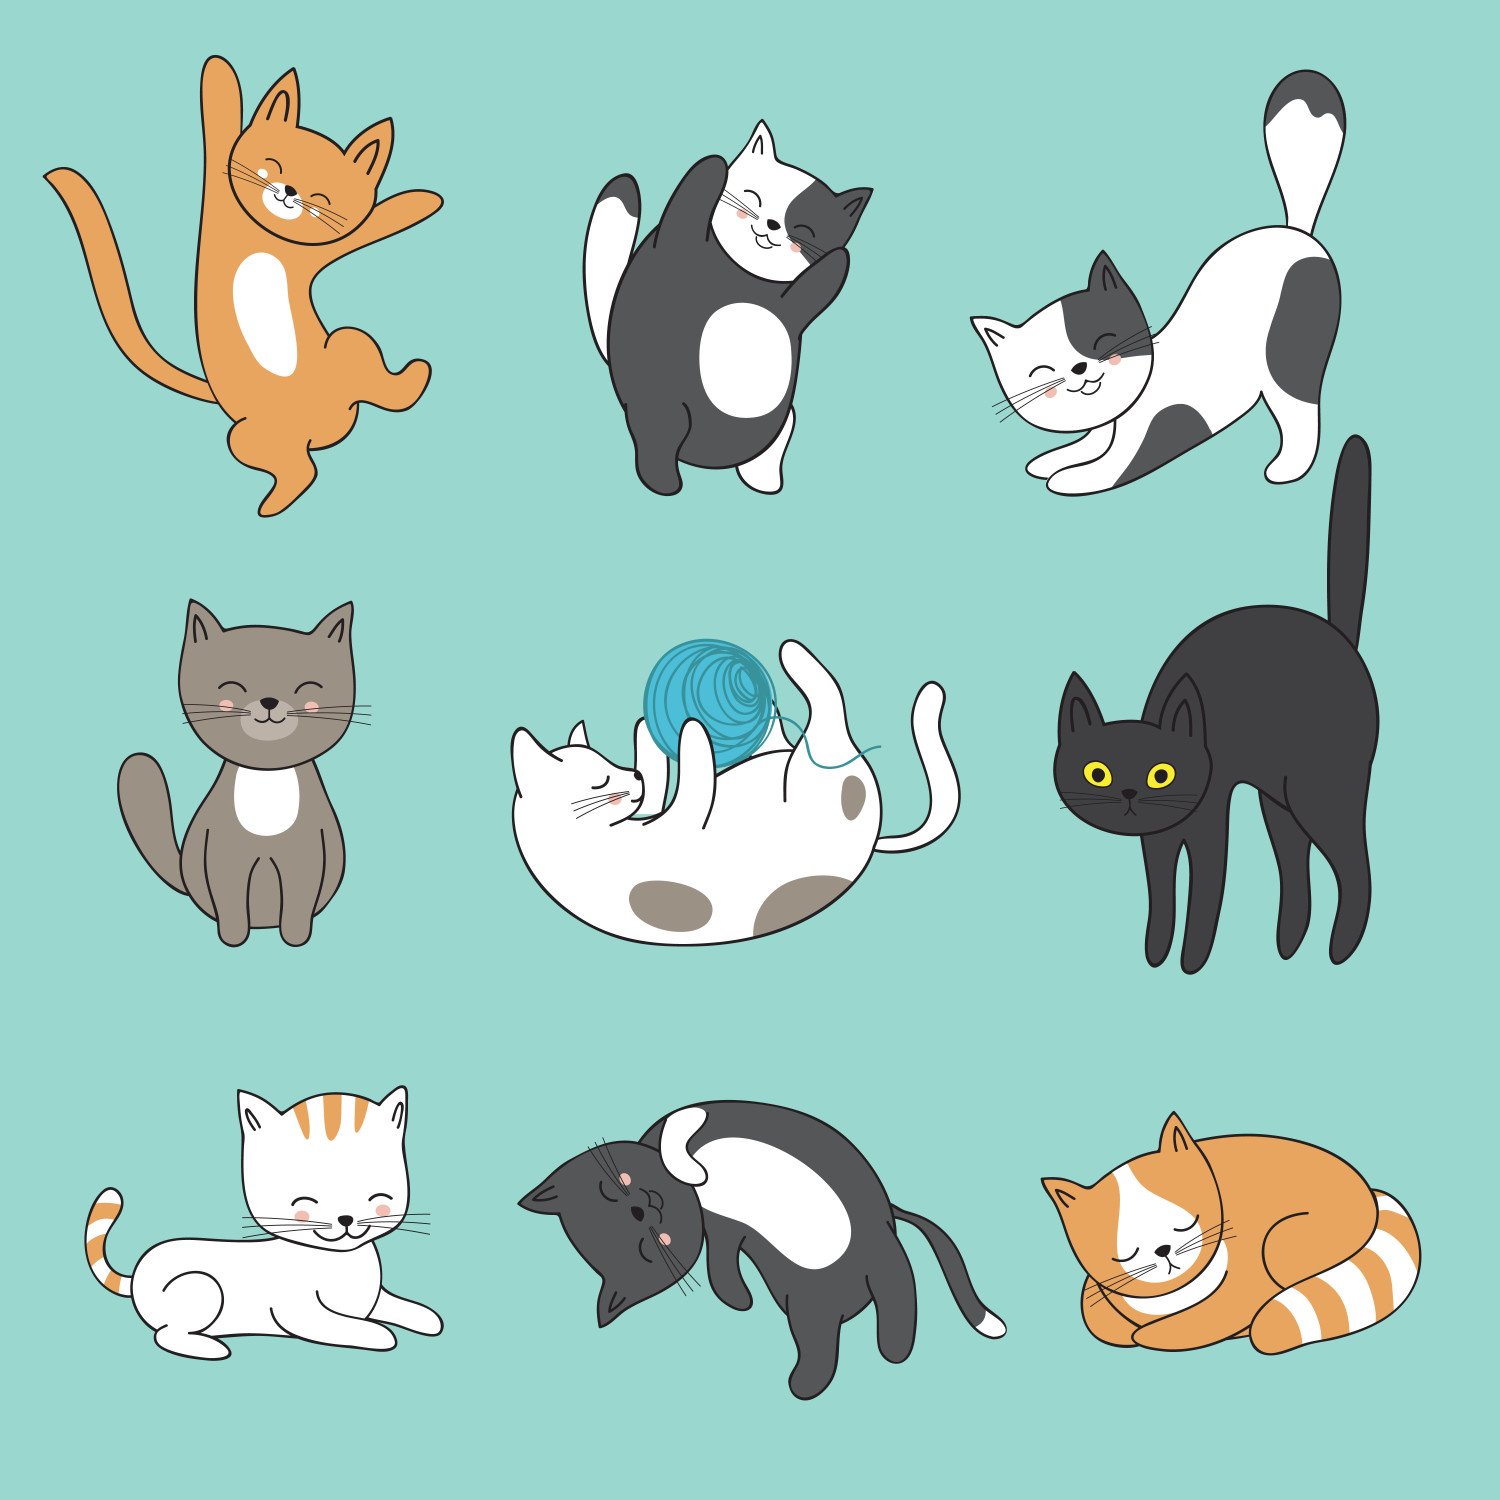 Download Wallpaper Kartun Kucing Hd Cikimmcom